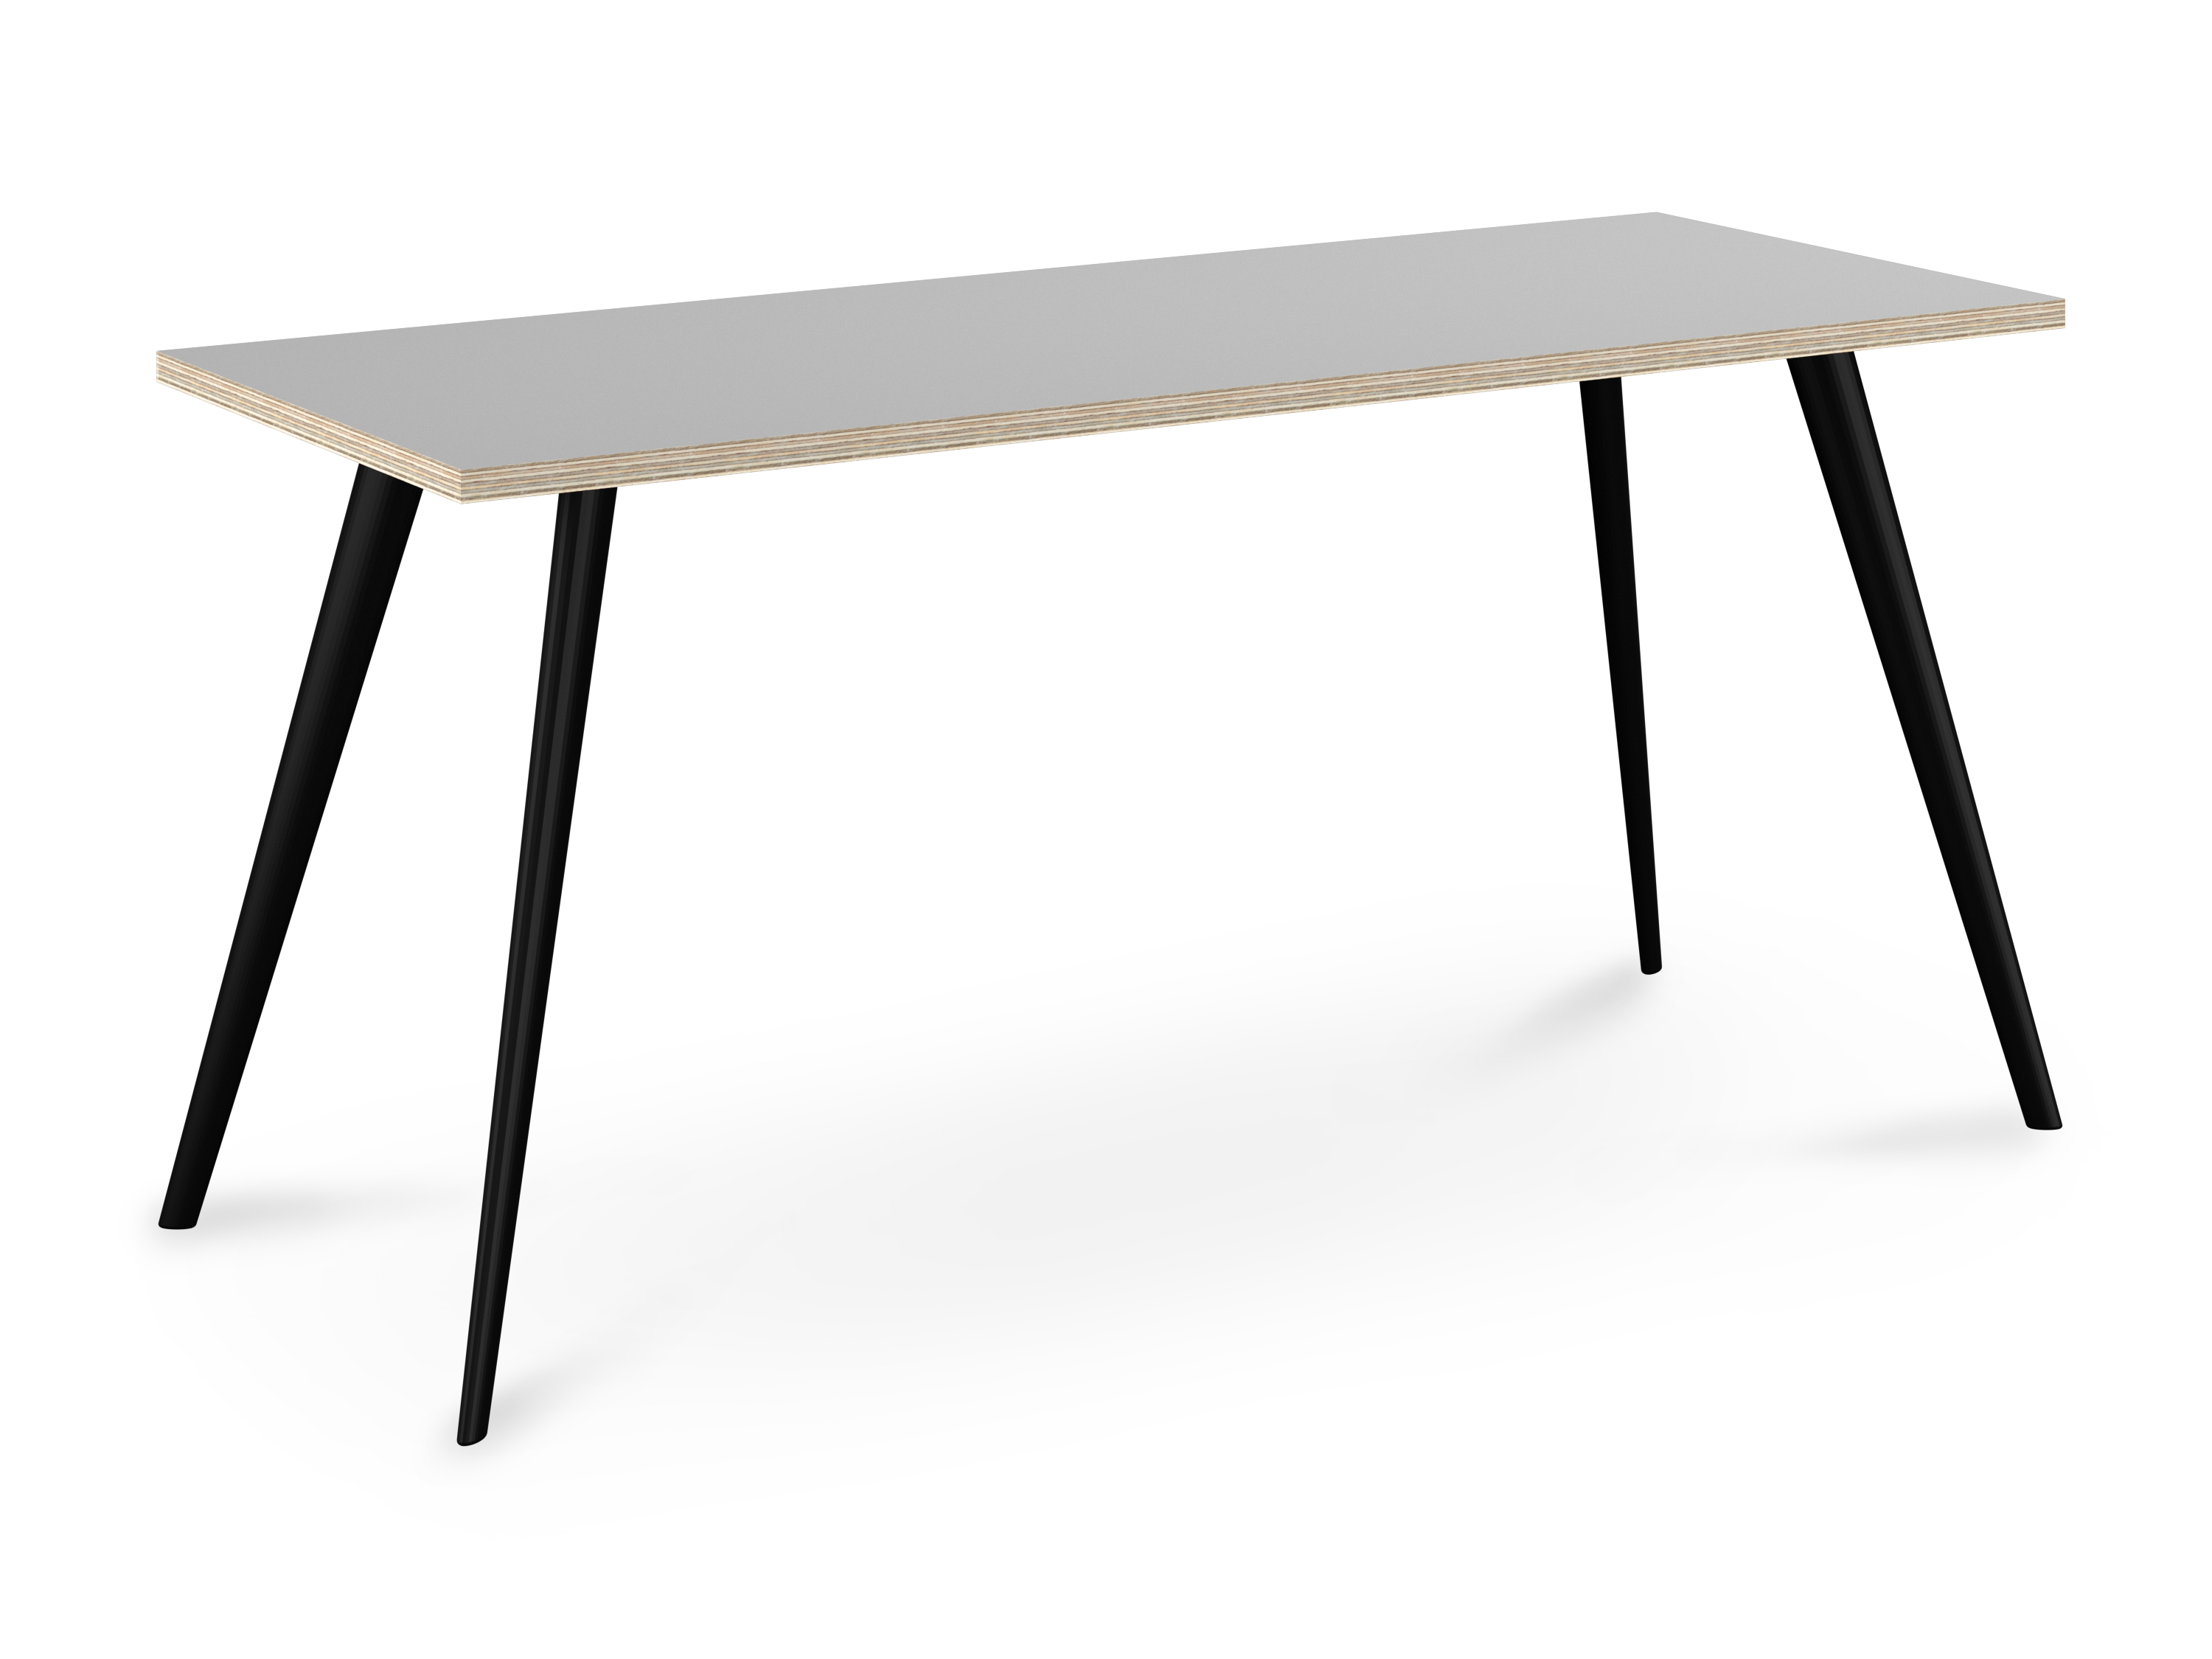 WS - Air desk - Black legs, Light Grey Acrylic Ply